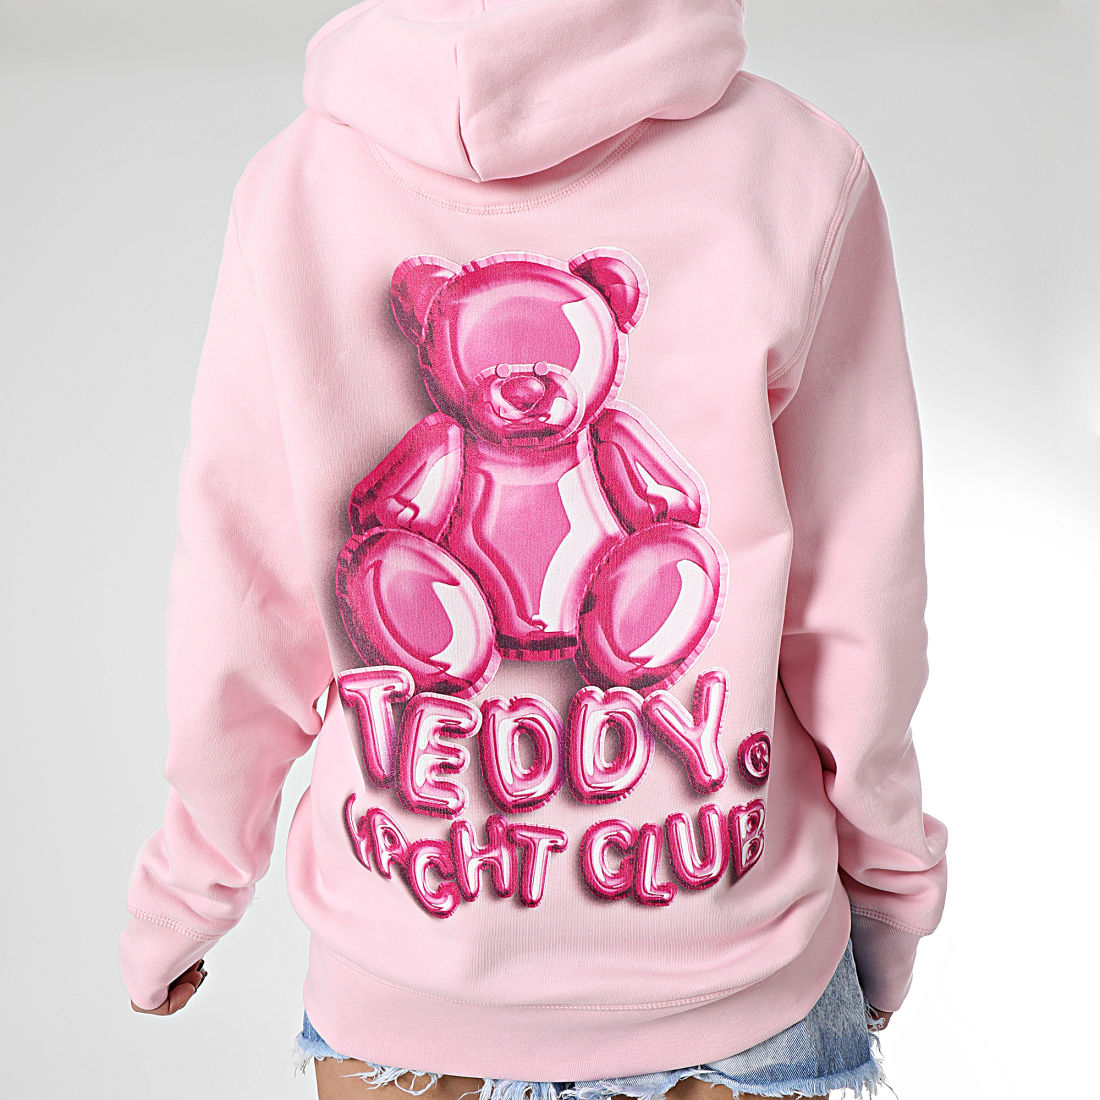 Teddy Yacht Club - Sweat Capuche Femme Art Series Pink Rose Pastel 